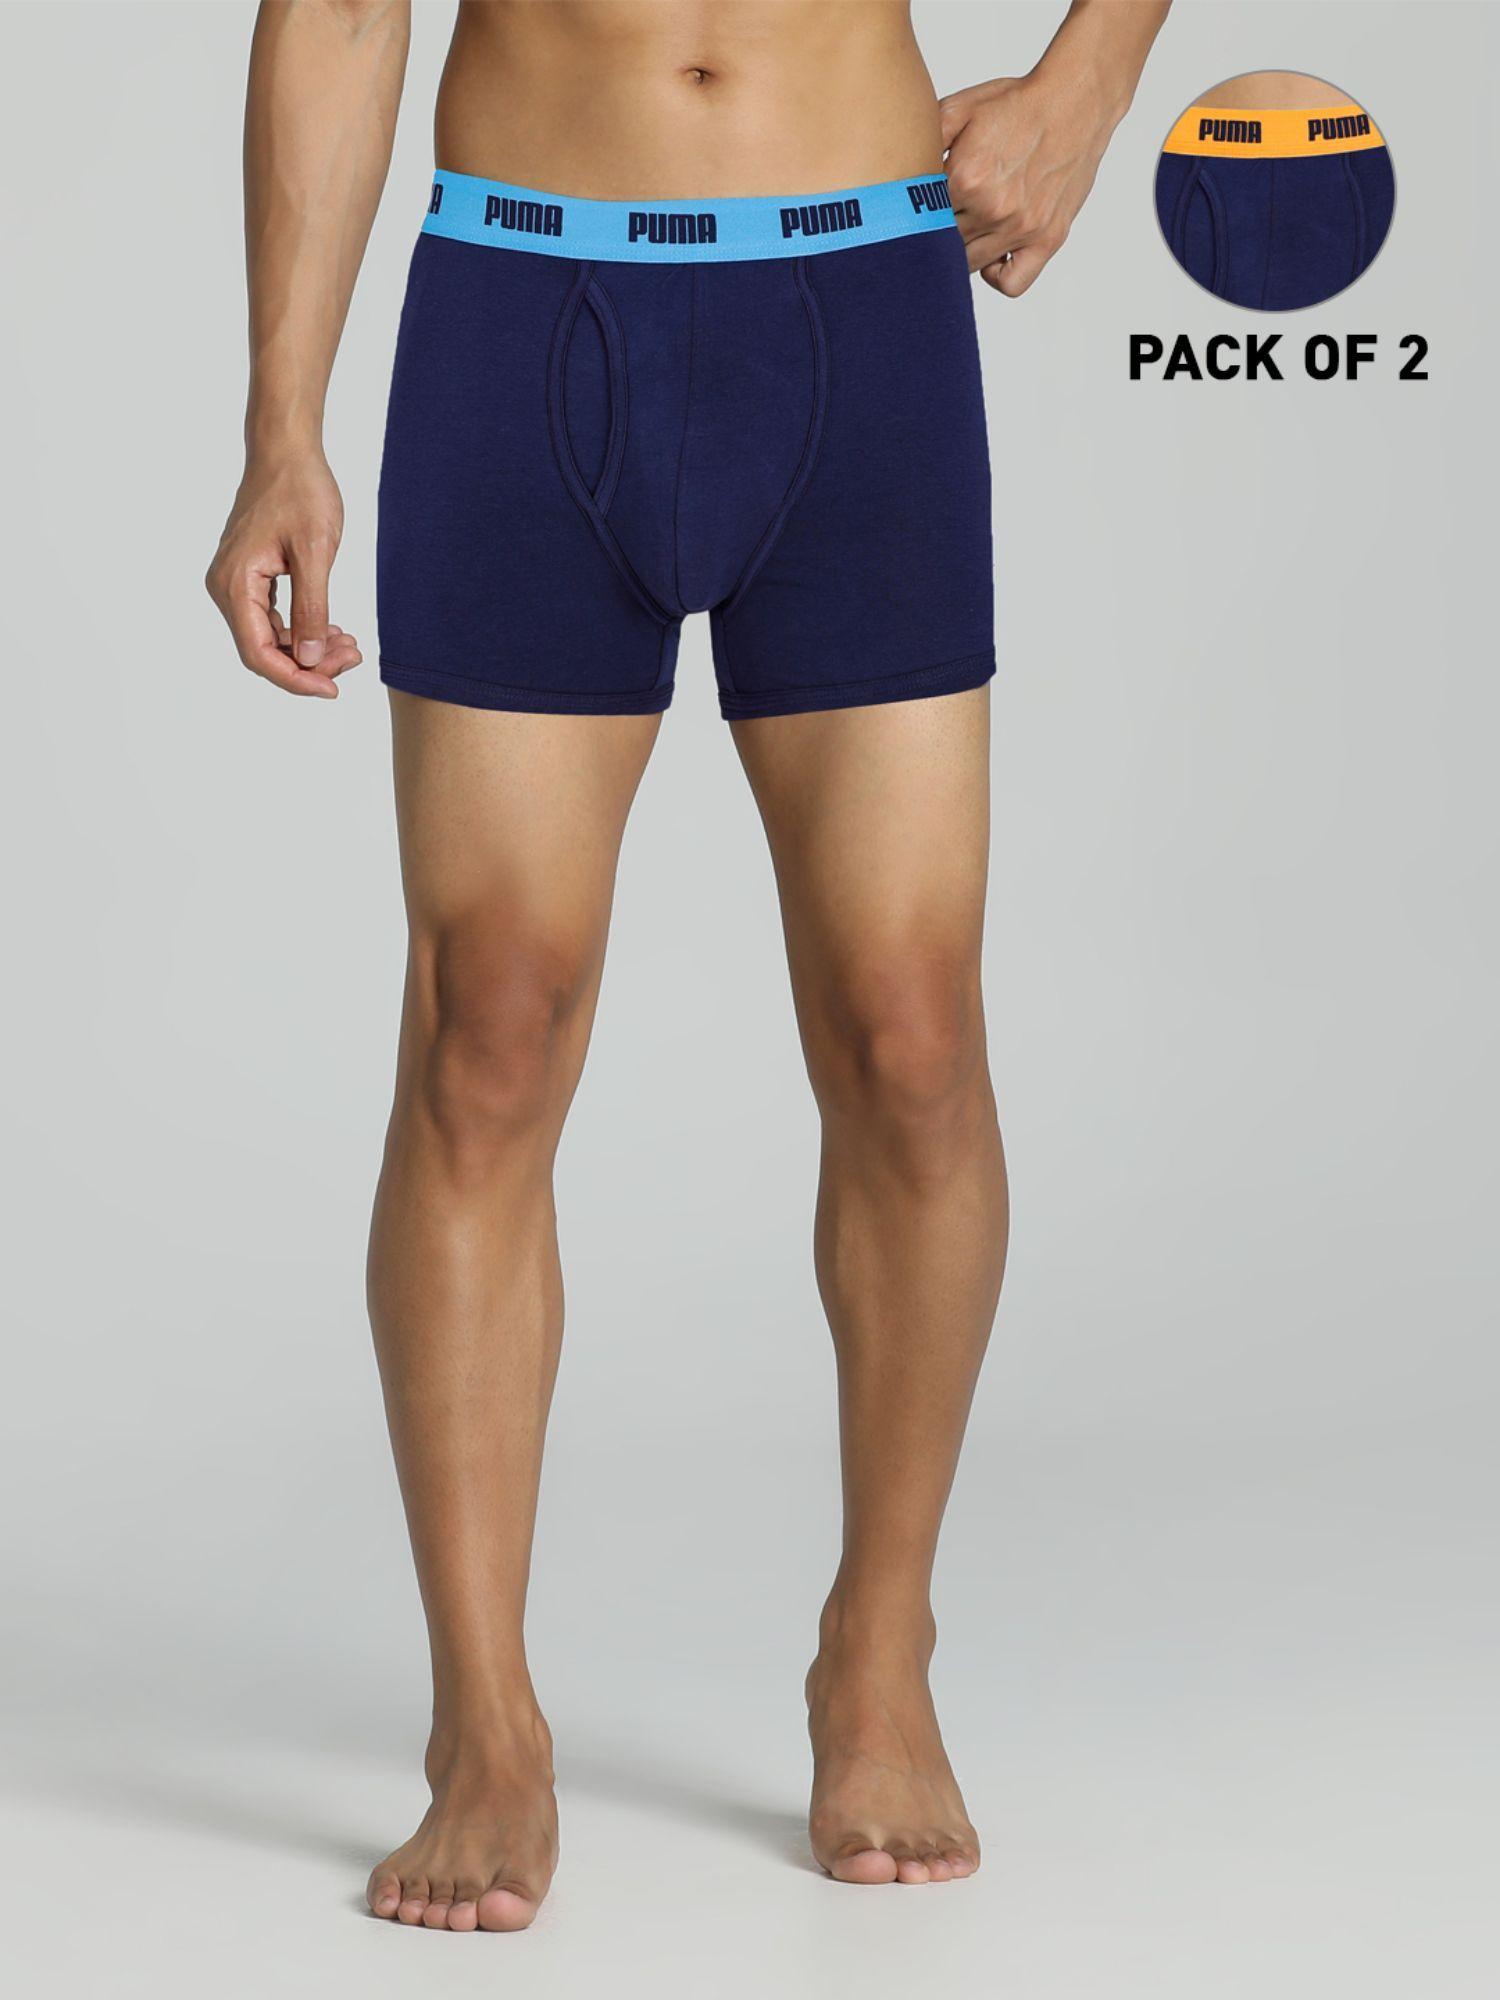 stretch elastic waistband mens blue trunks (pack of 2)